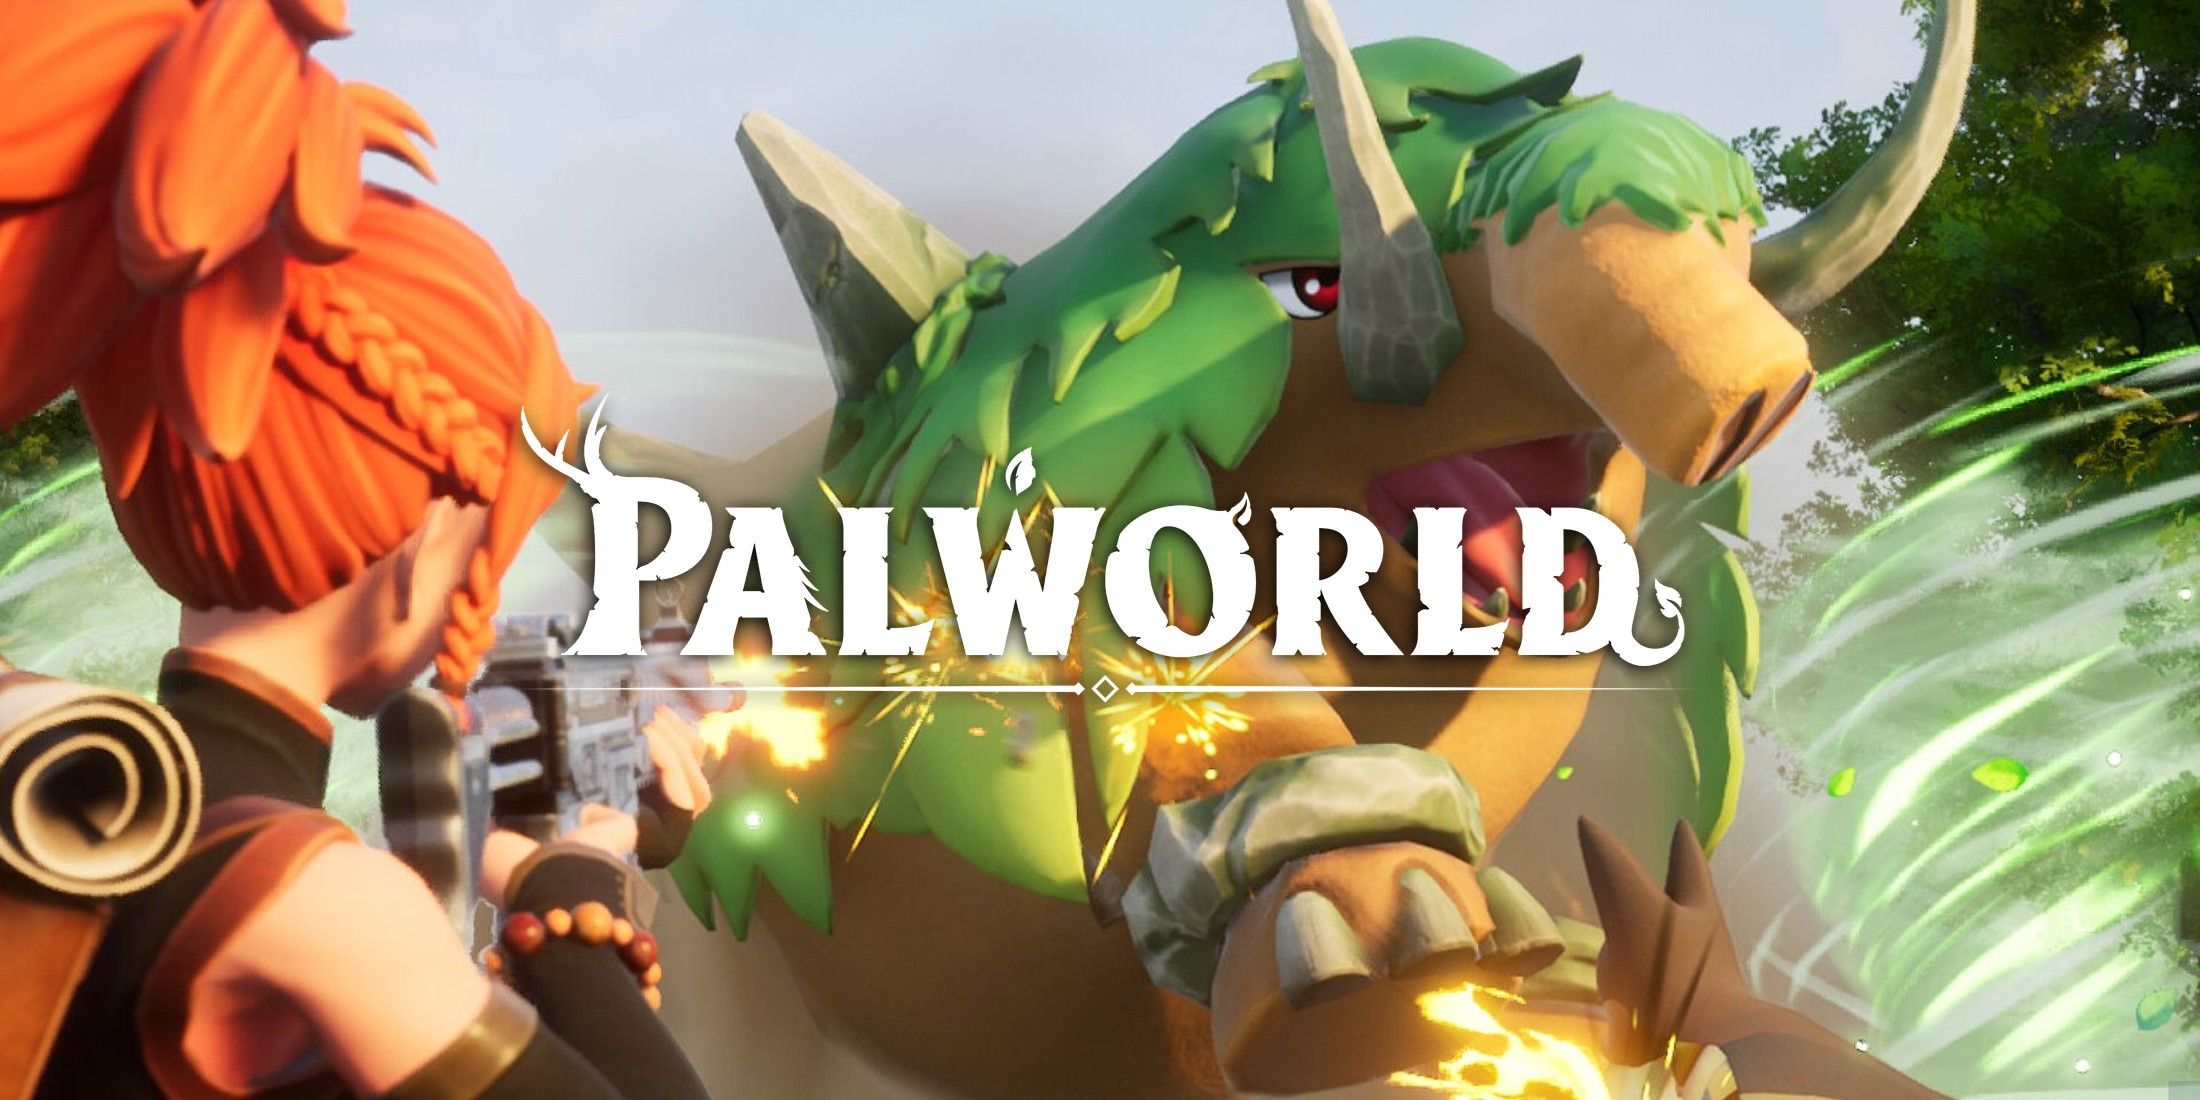 palworld mammorest with logo and player firing gun